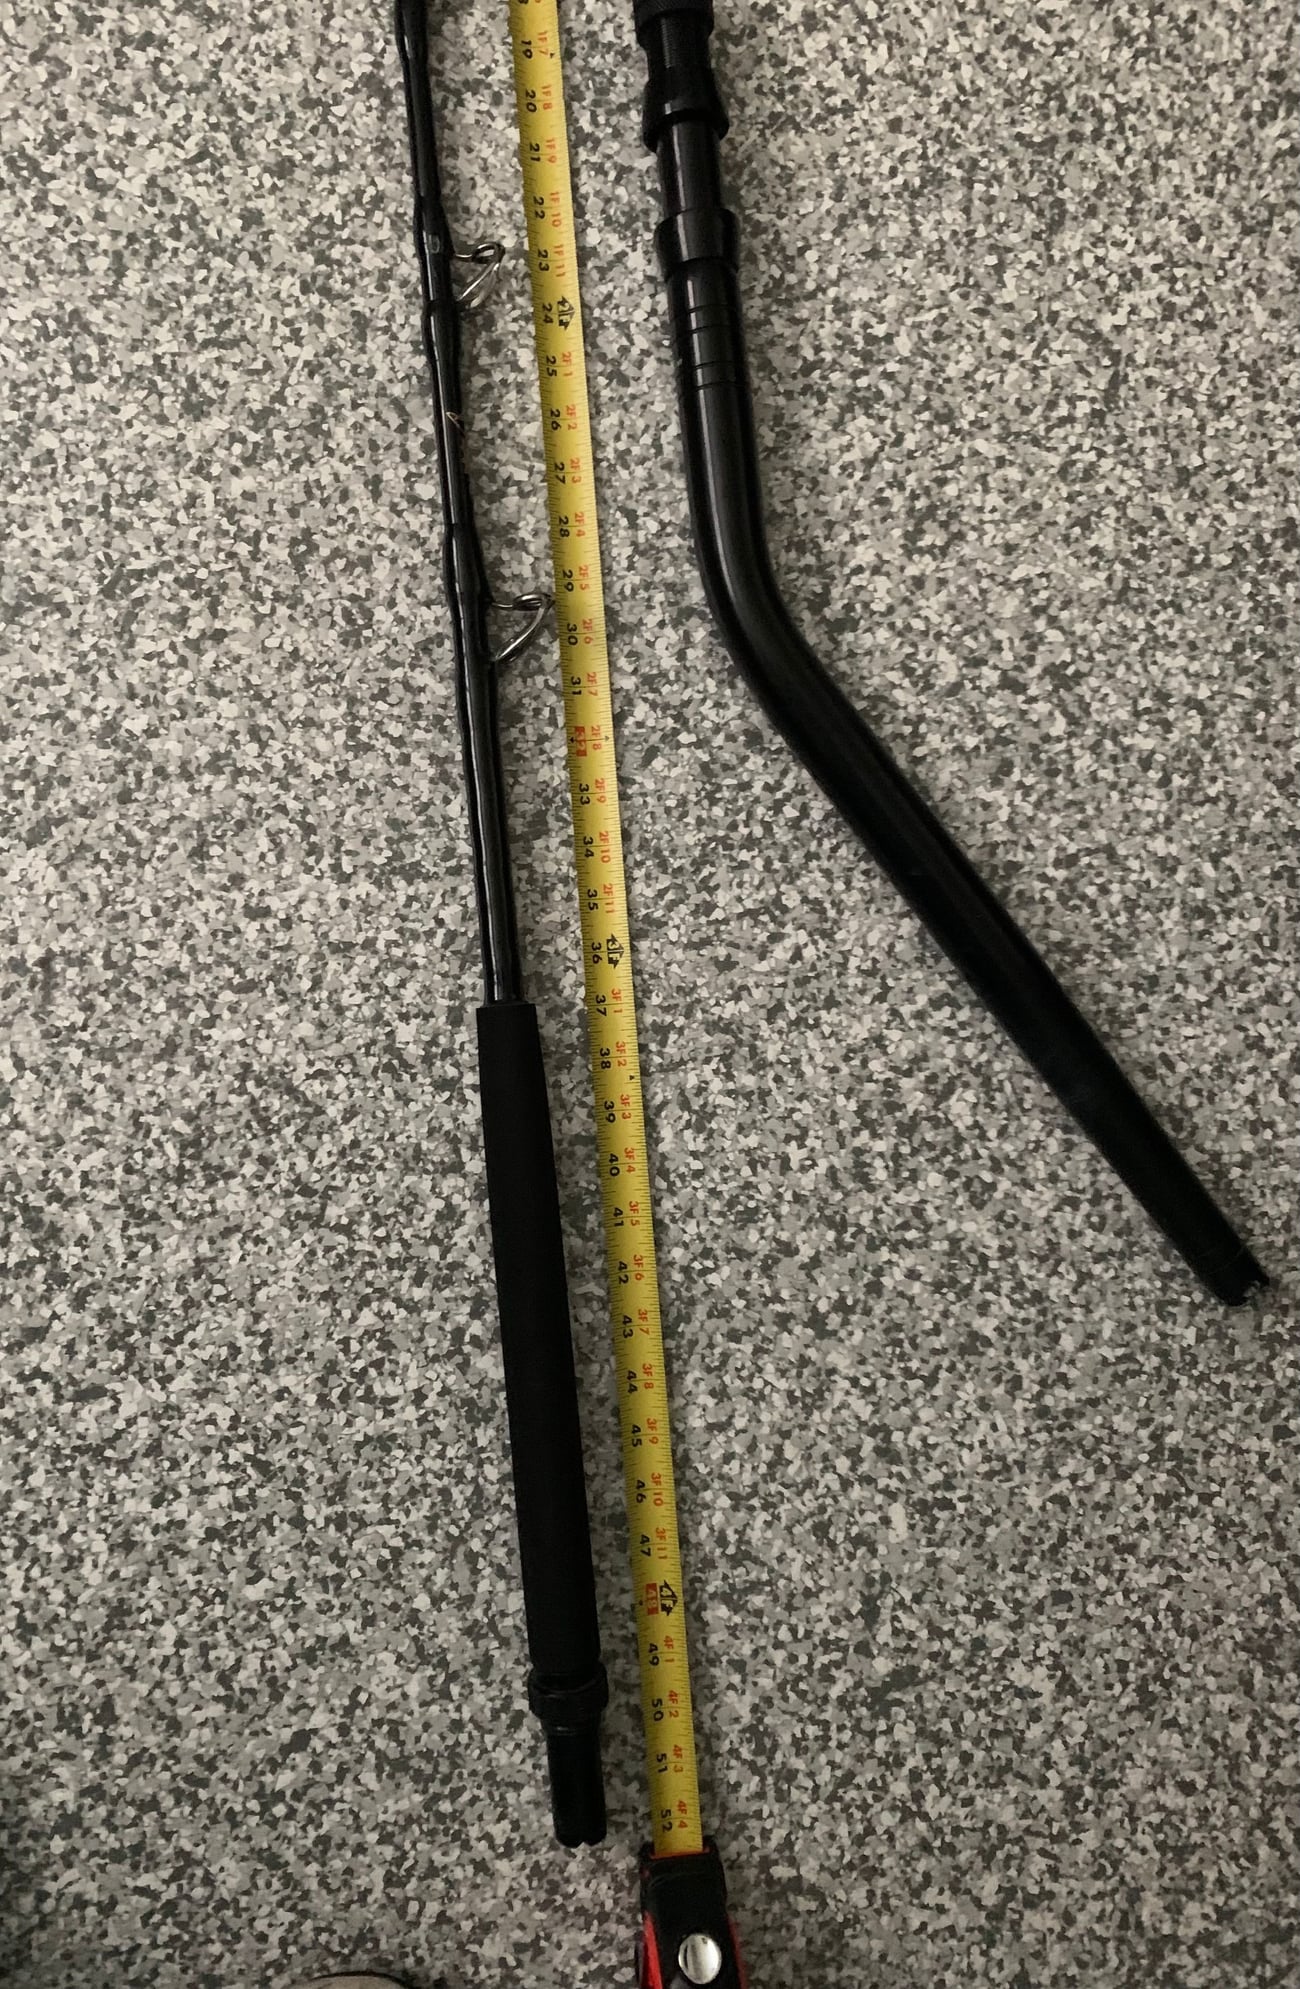 Pinnacle bent butt deep drop rod 60-100 pound with swivel tip